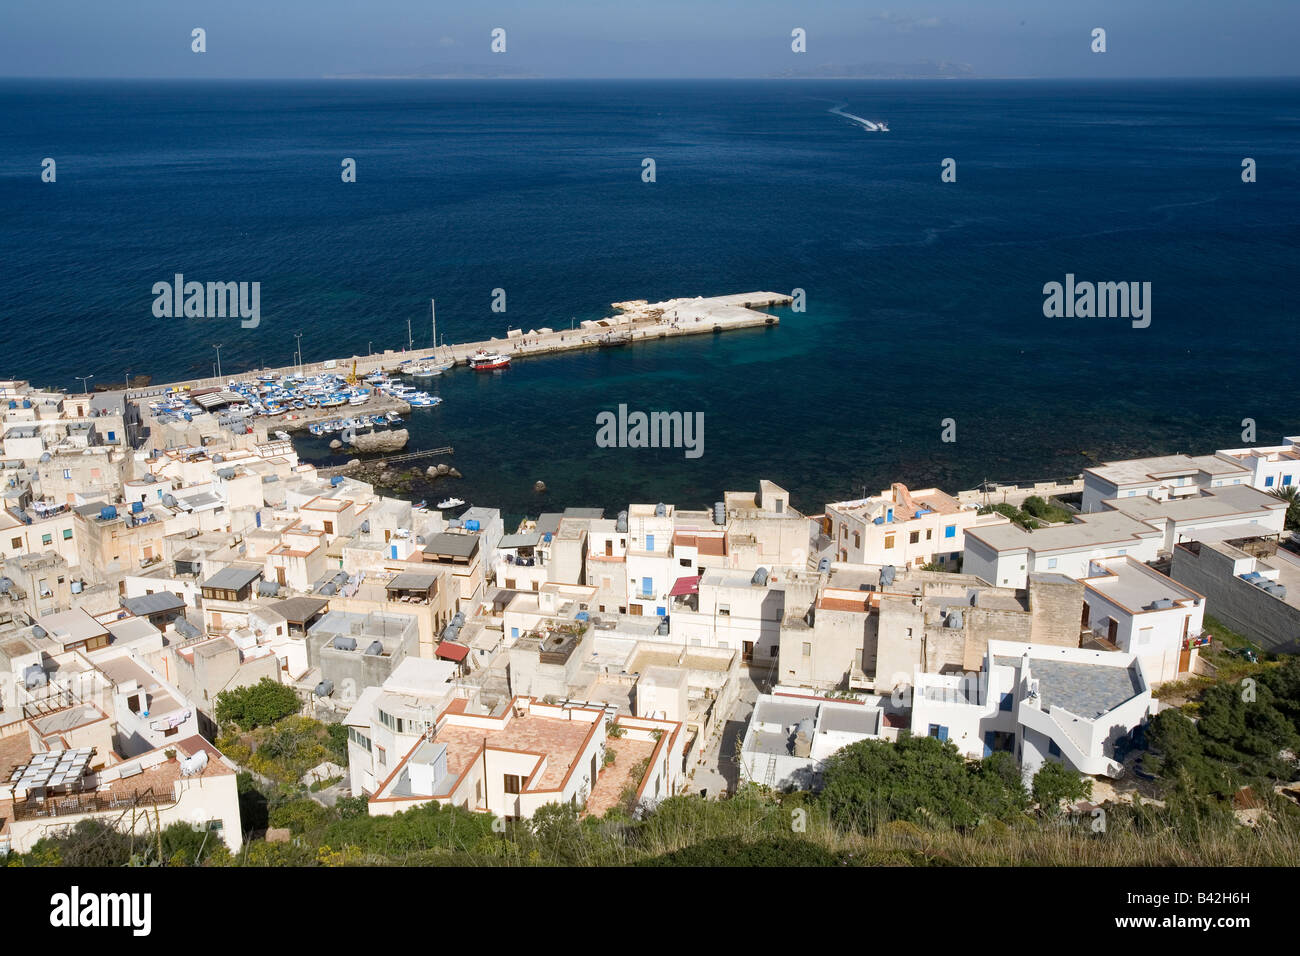 Village and Harbour at Marettimo Island Marettimo Aegadian Islands Sicily Mediterranean Sea Italy Stock Photo